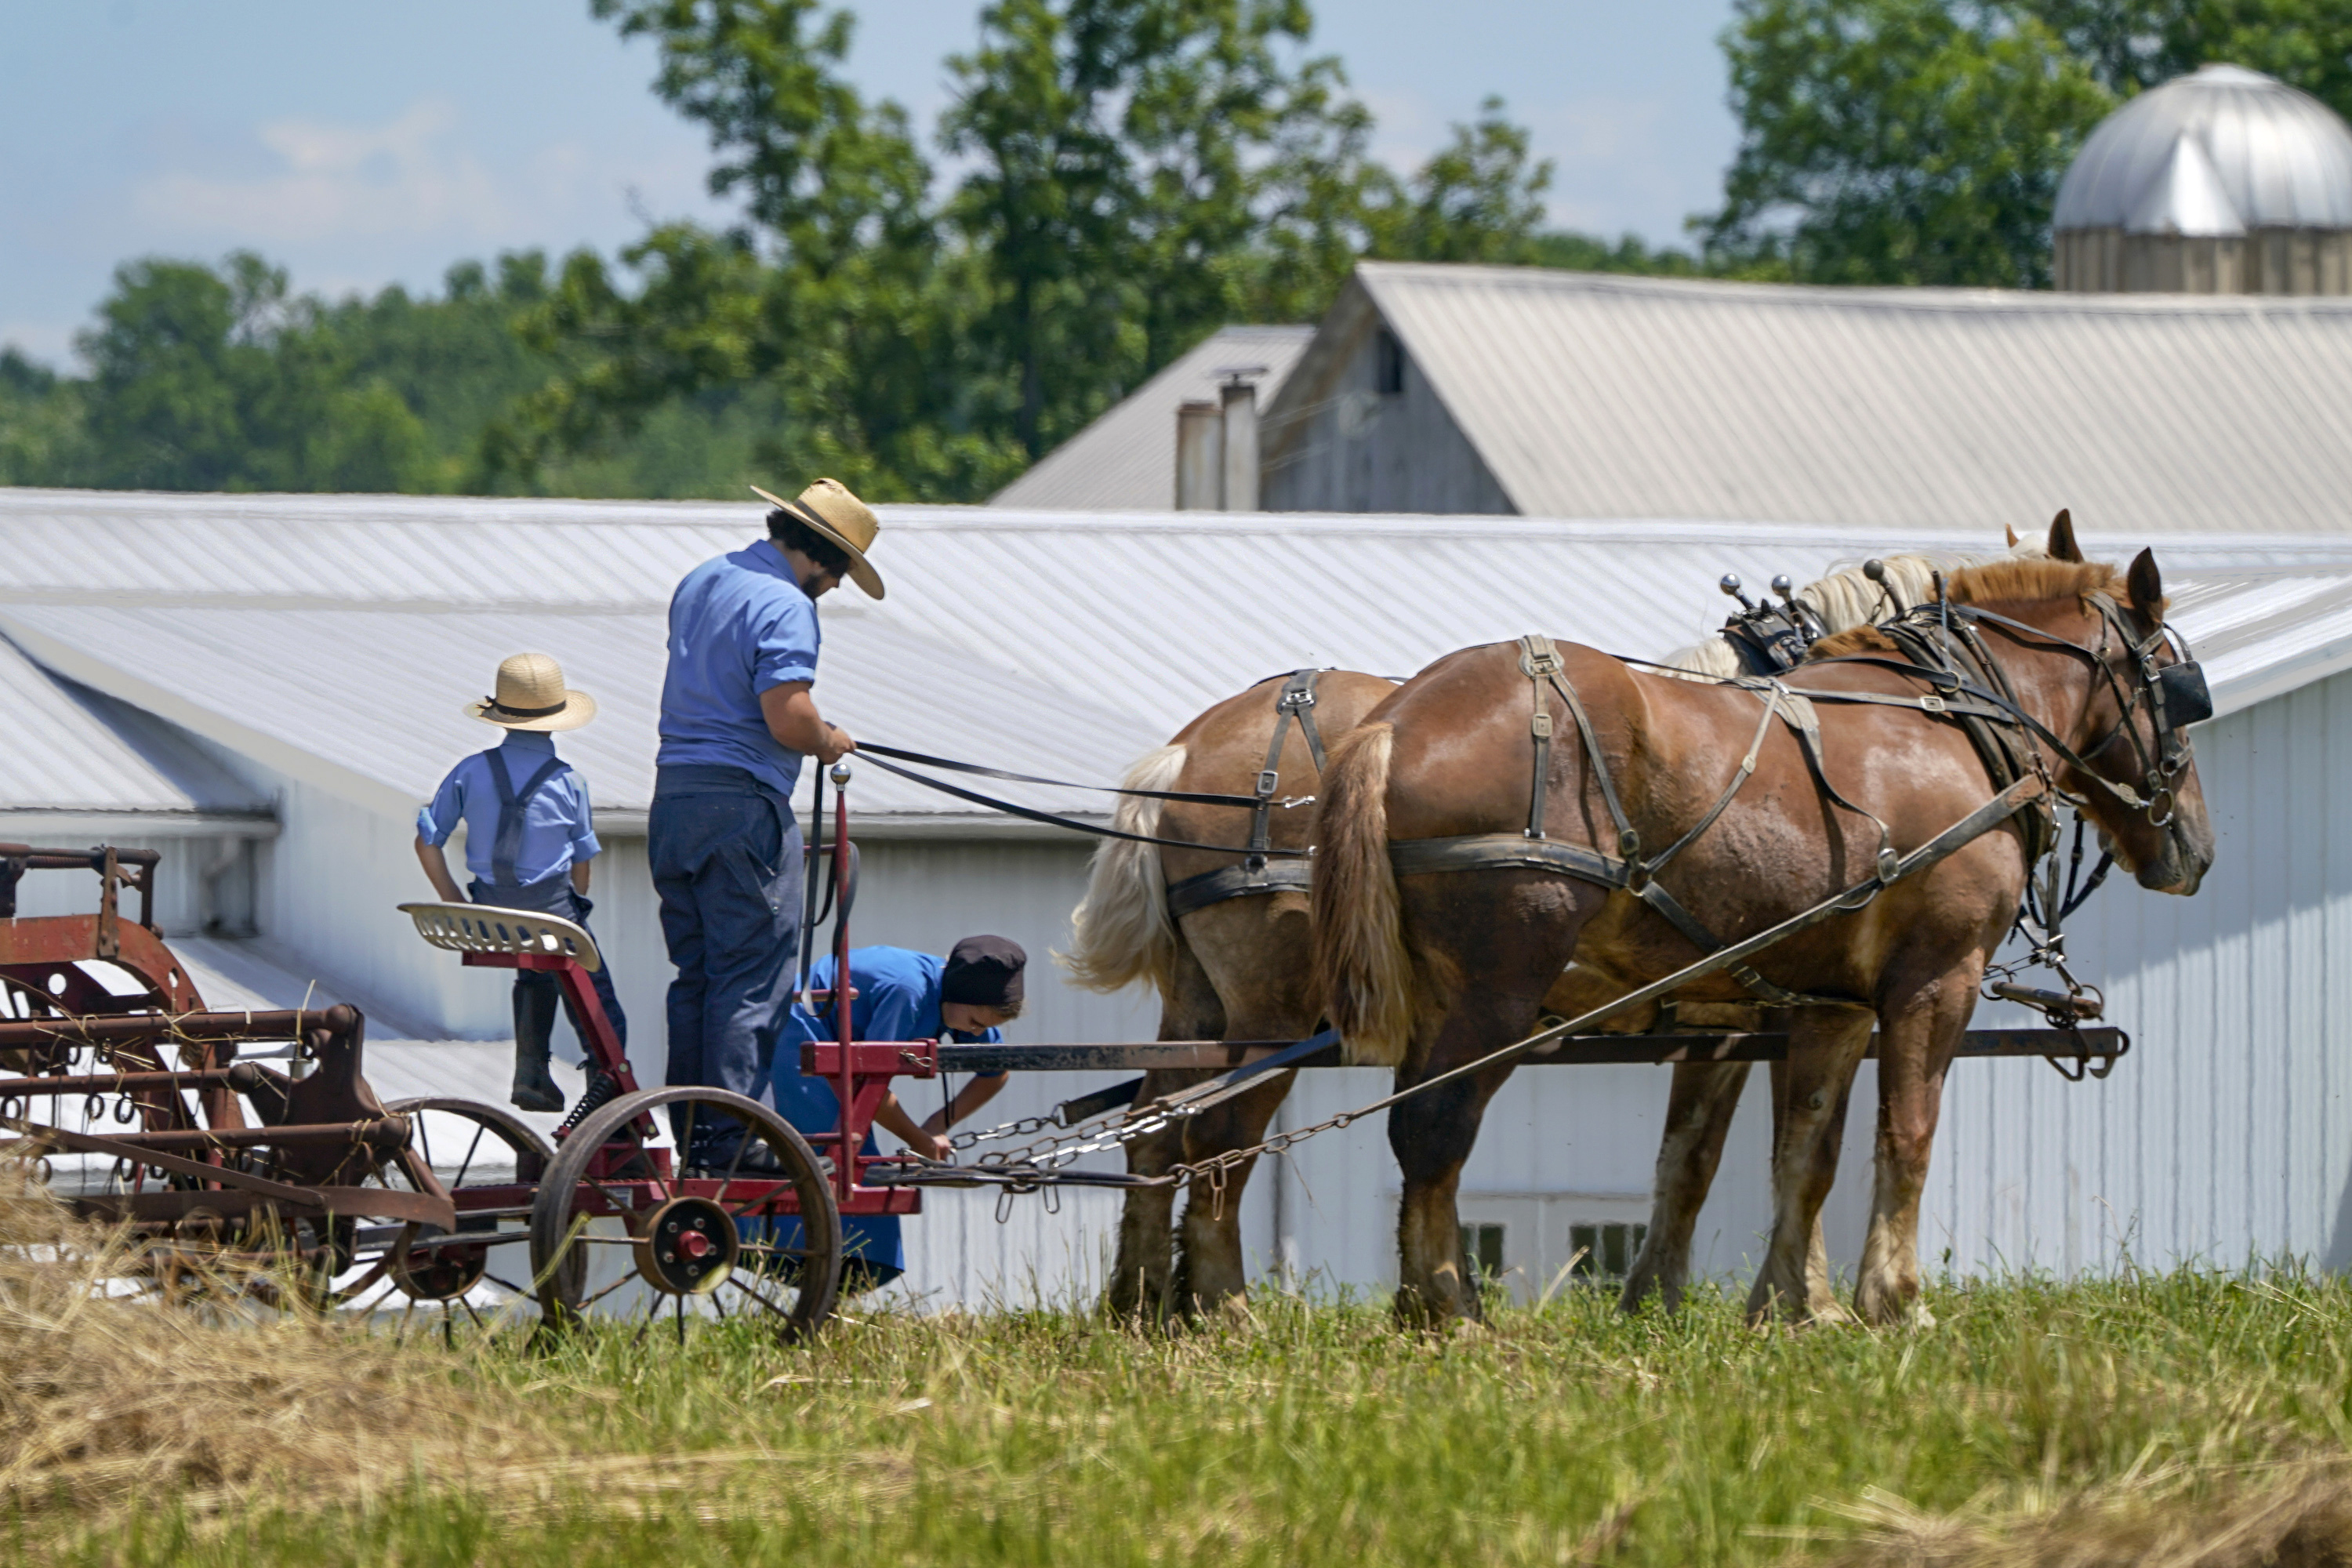 Amish put faith in Gods will and herd immunity over vaccine